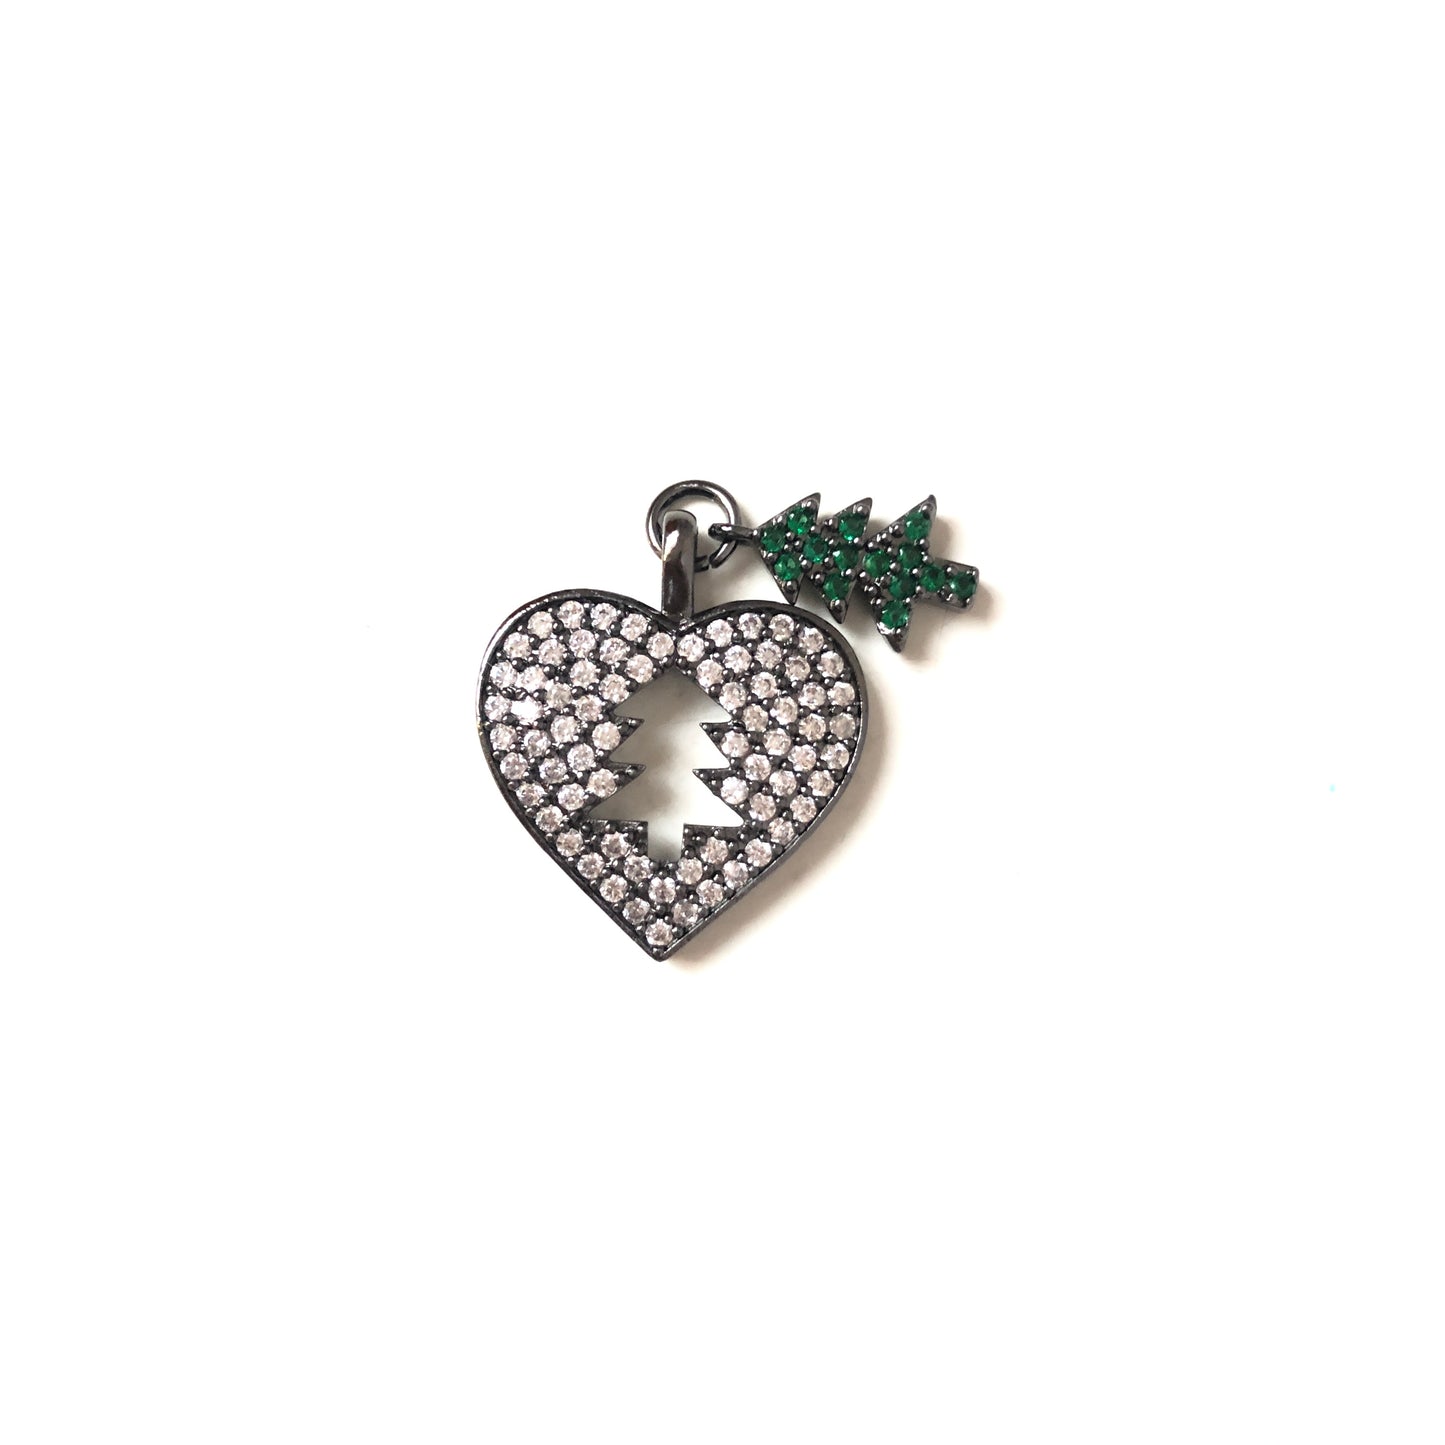 10pcs/lot 23*20mm CZ Paved Christmas Tree Heart Charms Black CZ Paved Charms Christmas Hearts Charms Beads Beyond